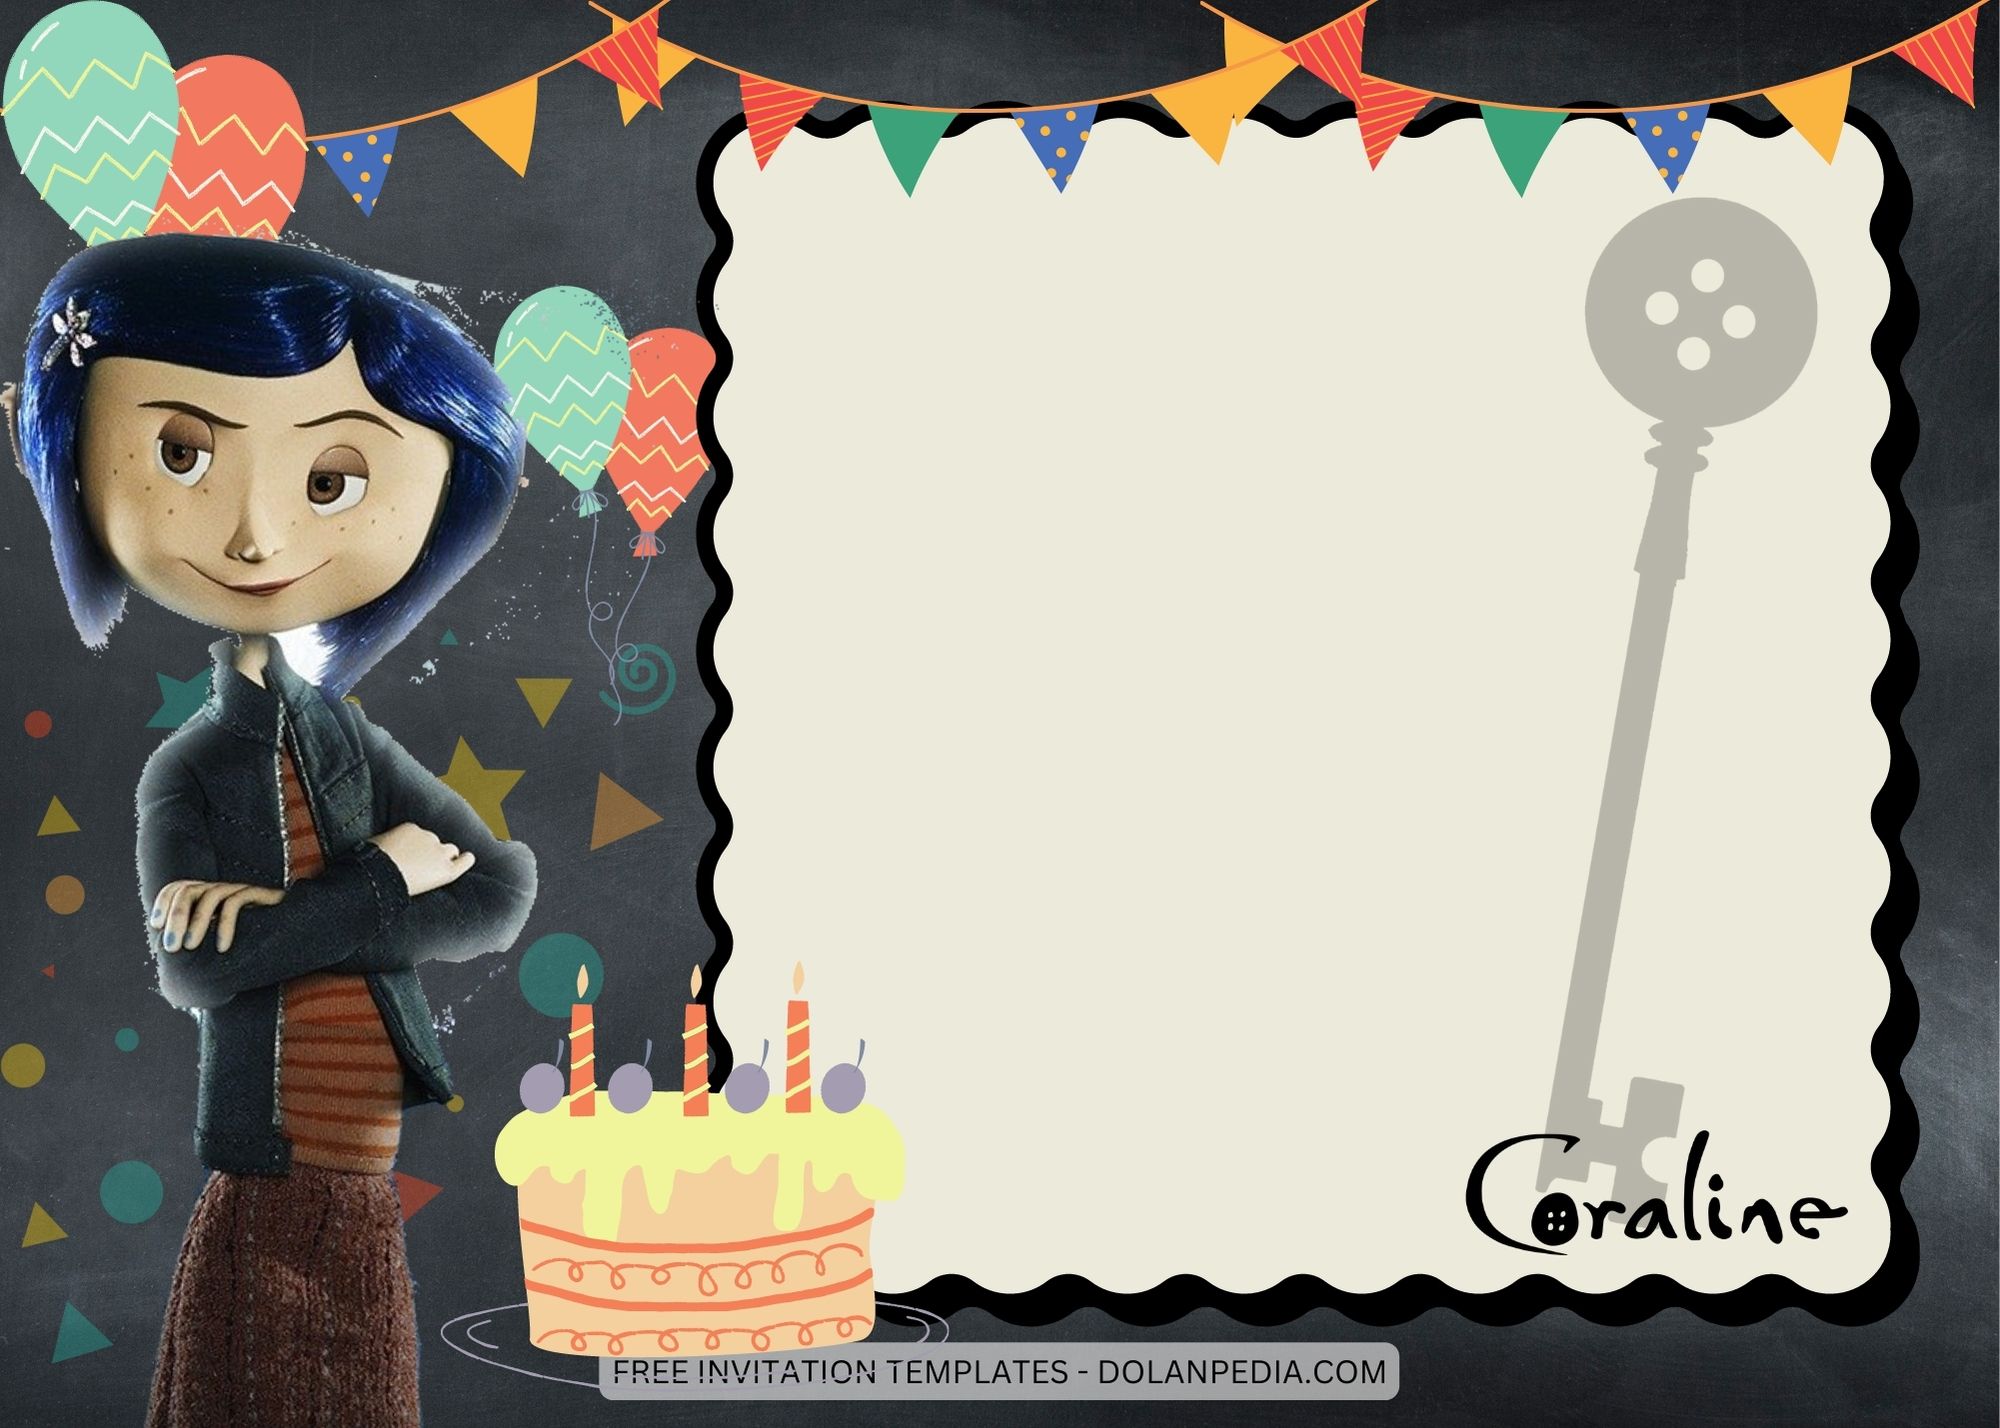 Blank Coraline Birthday Invitation Templates Two